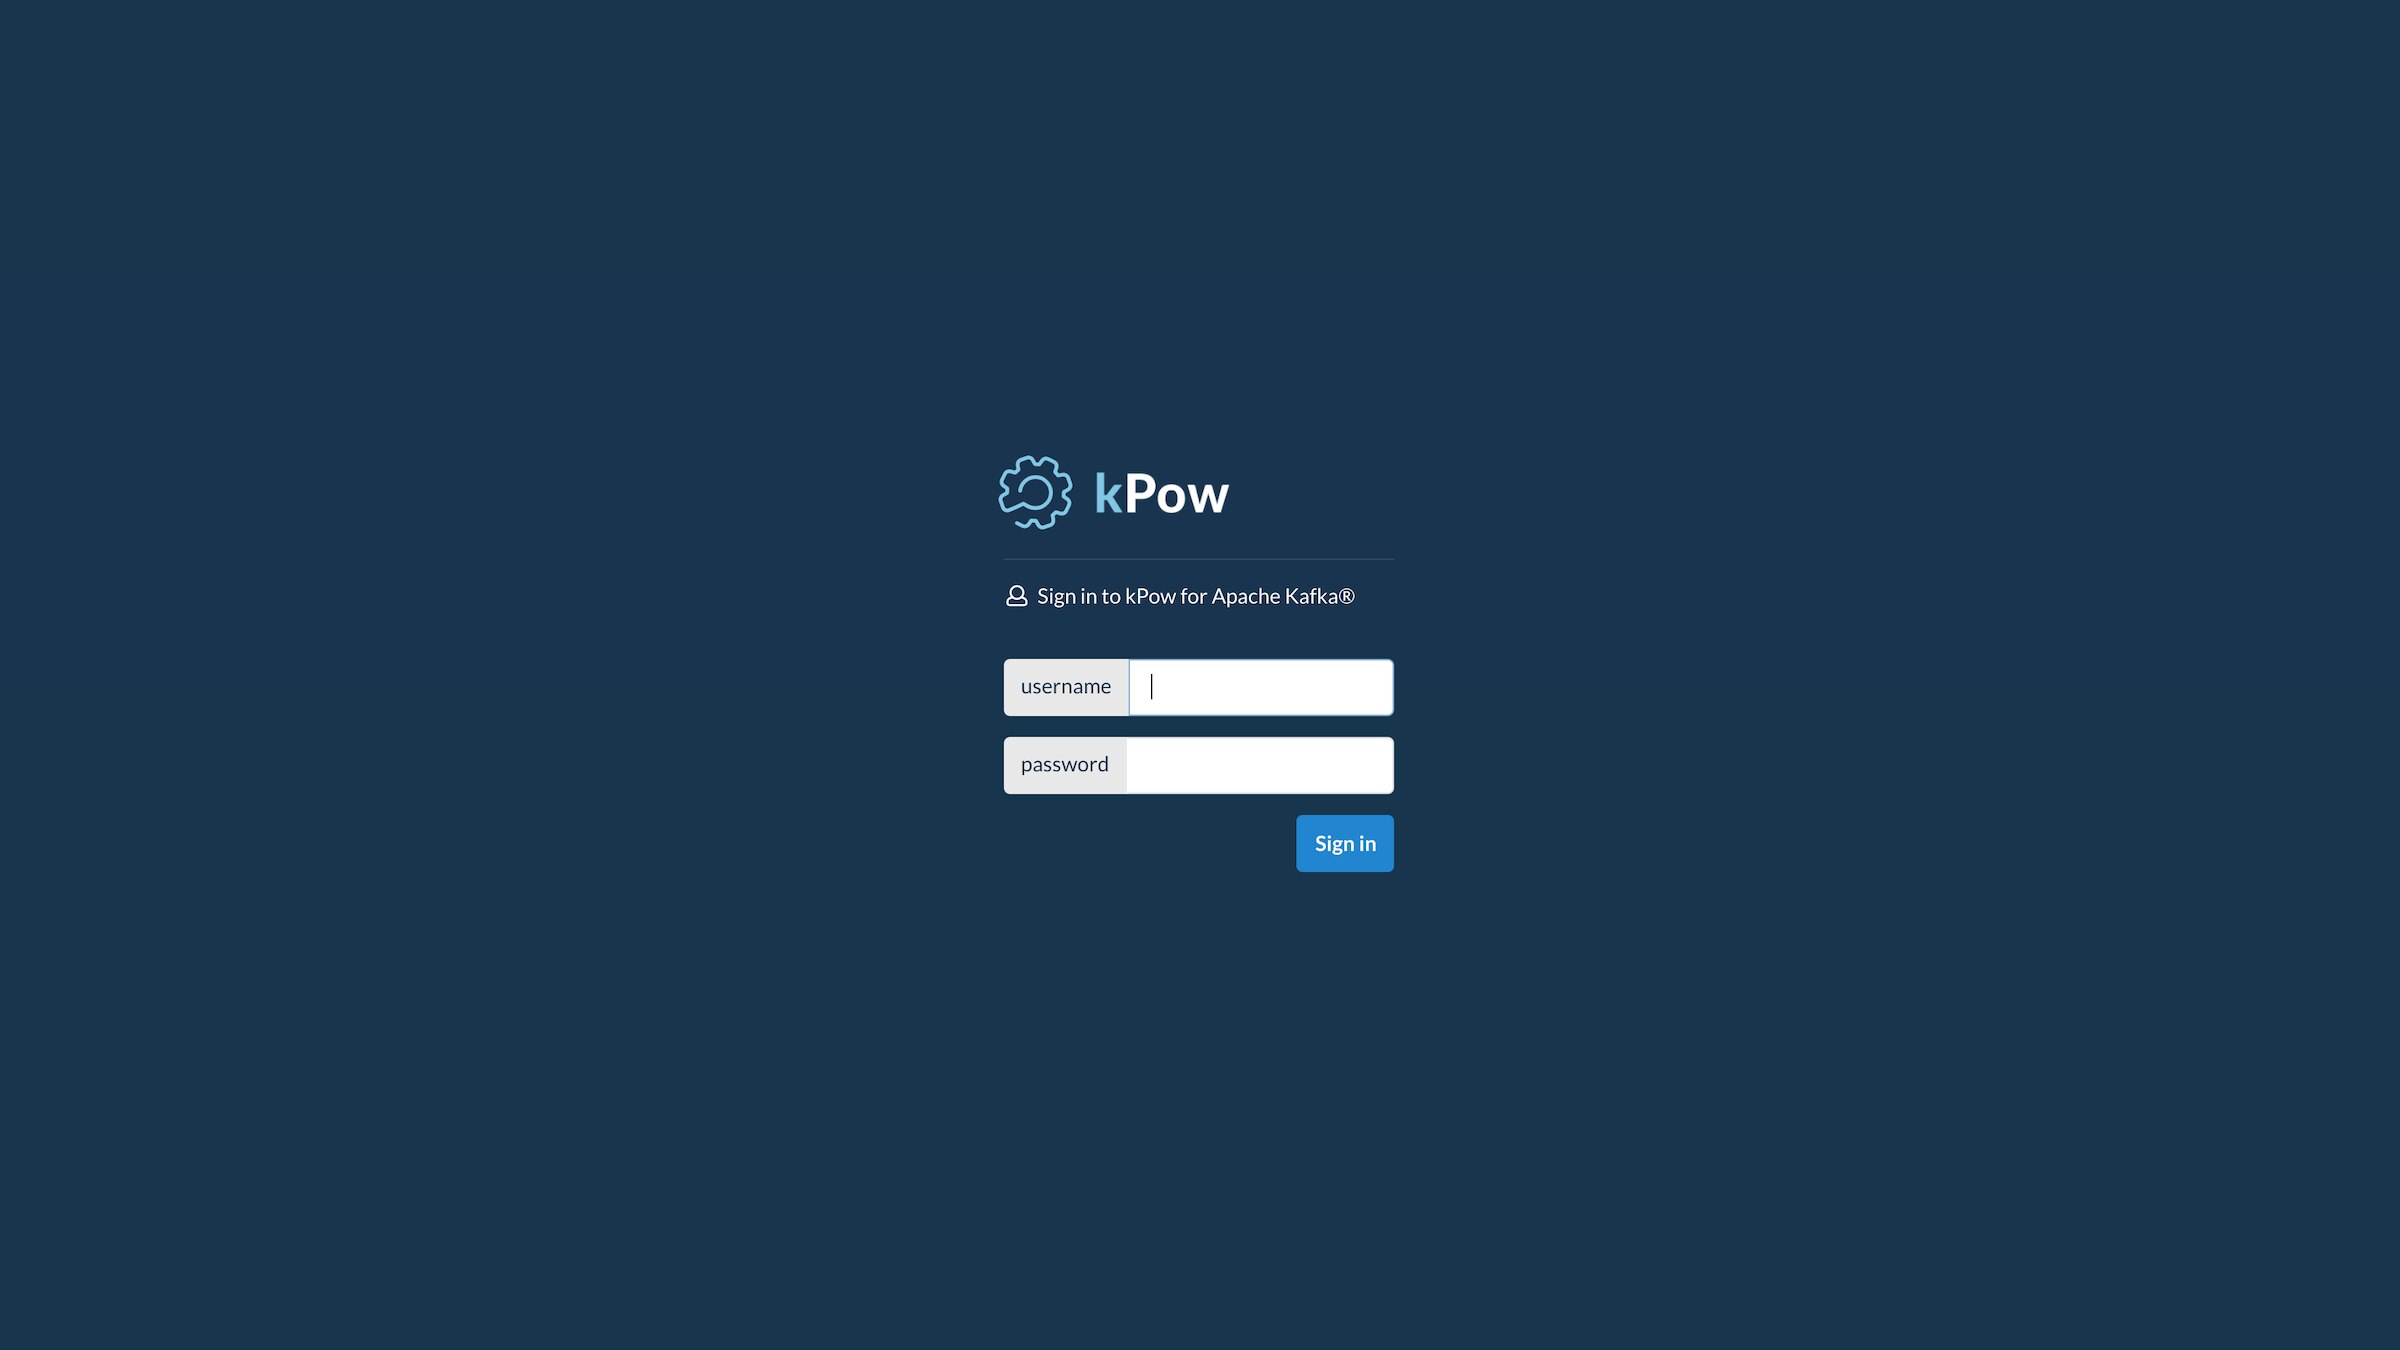 kPow Log-in UI